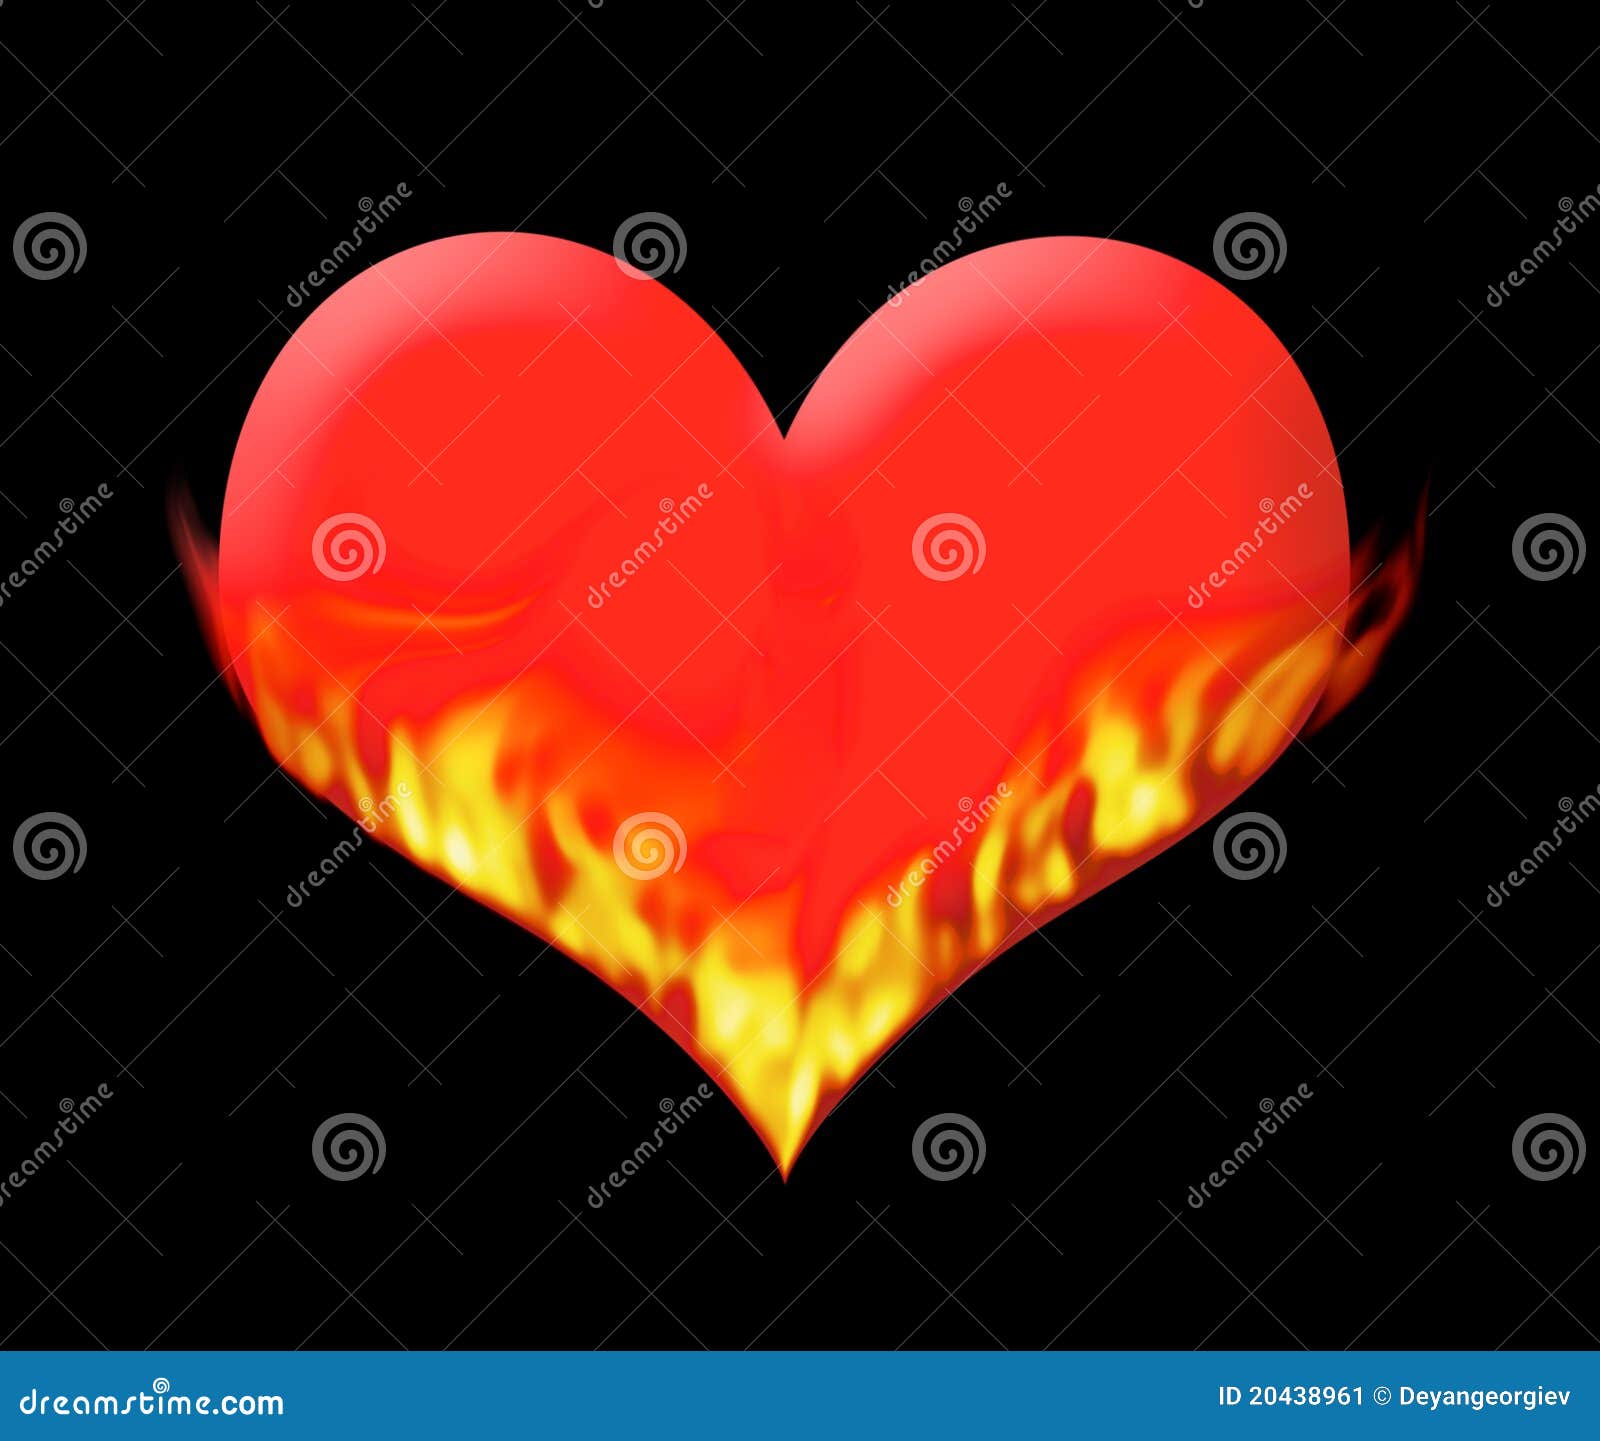 fire heart clipart - photo #36